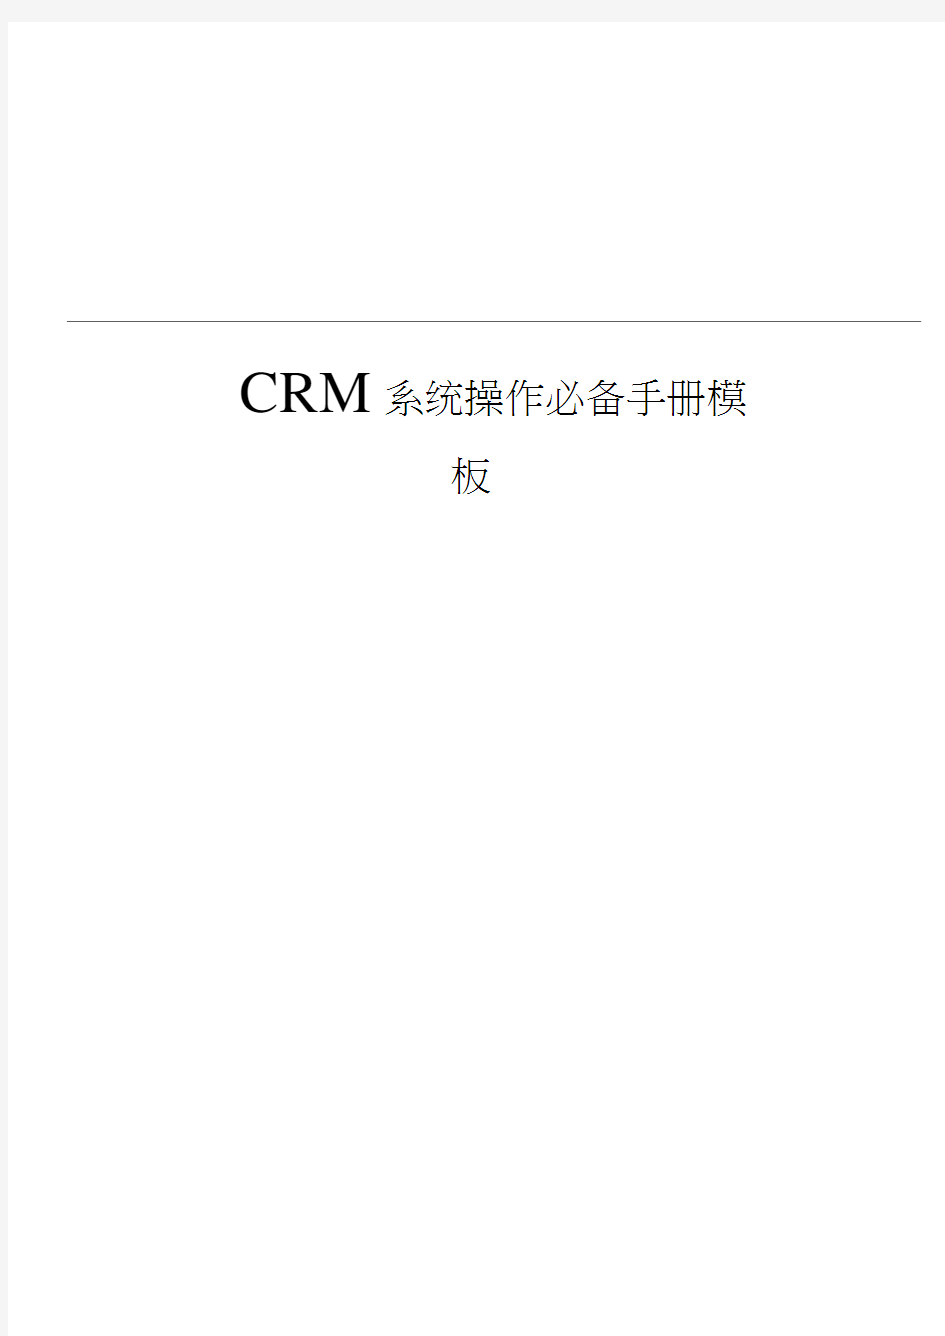 CRM系统操作必备手册模板